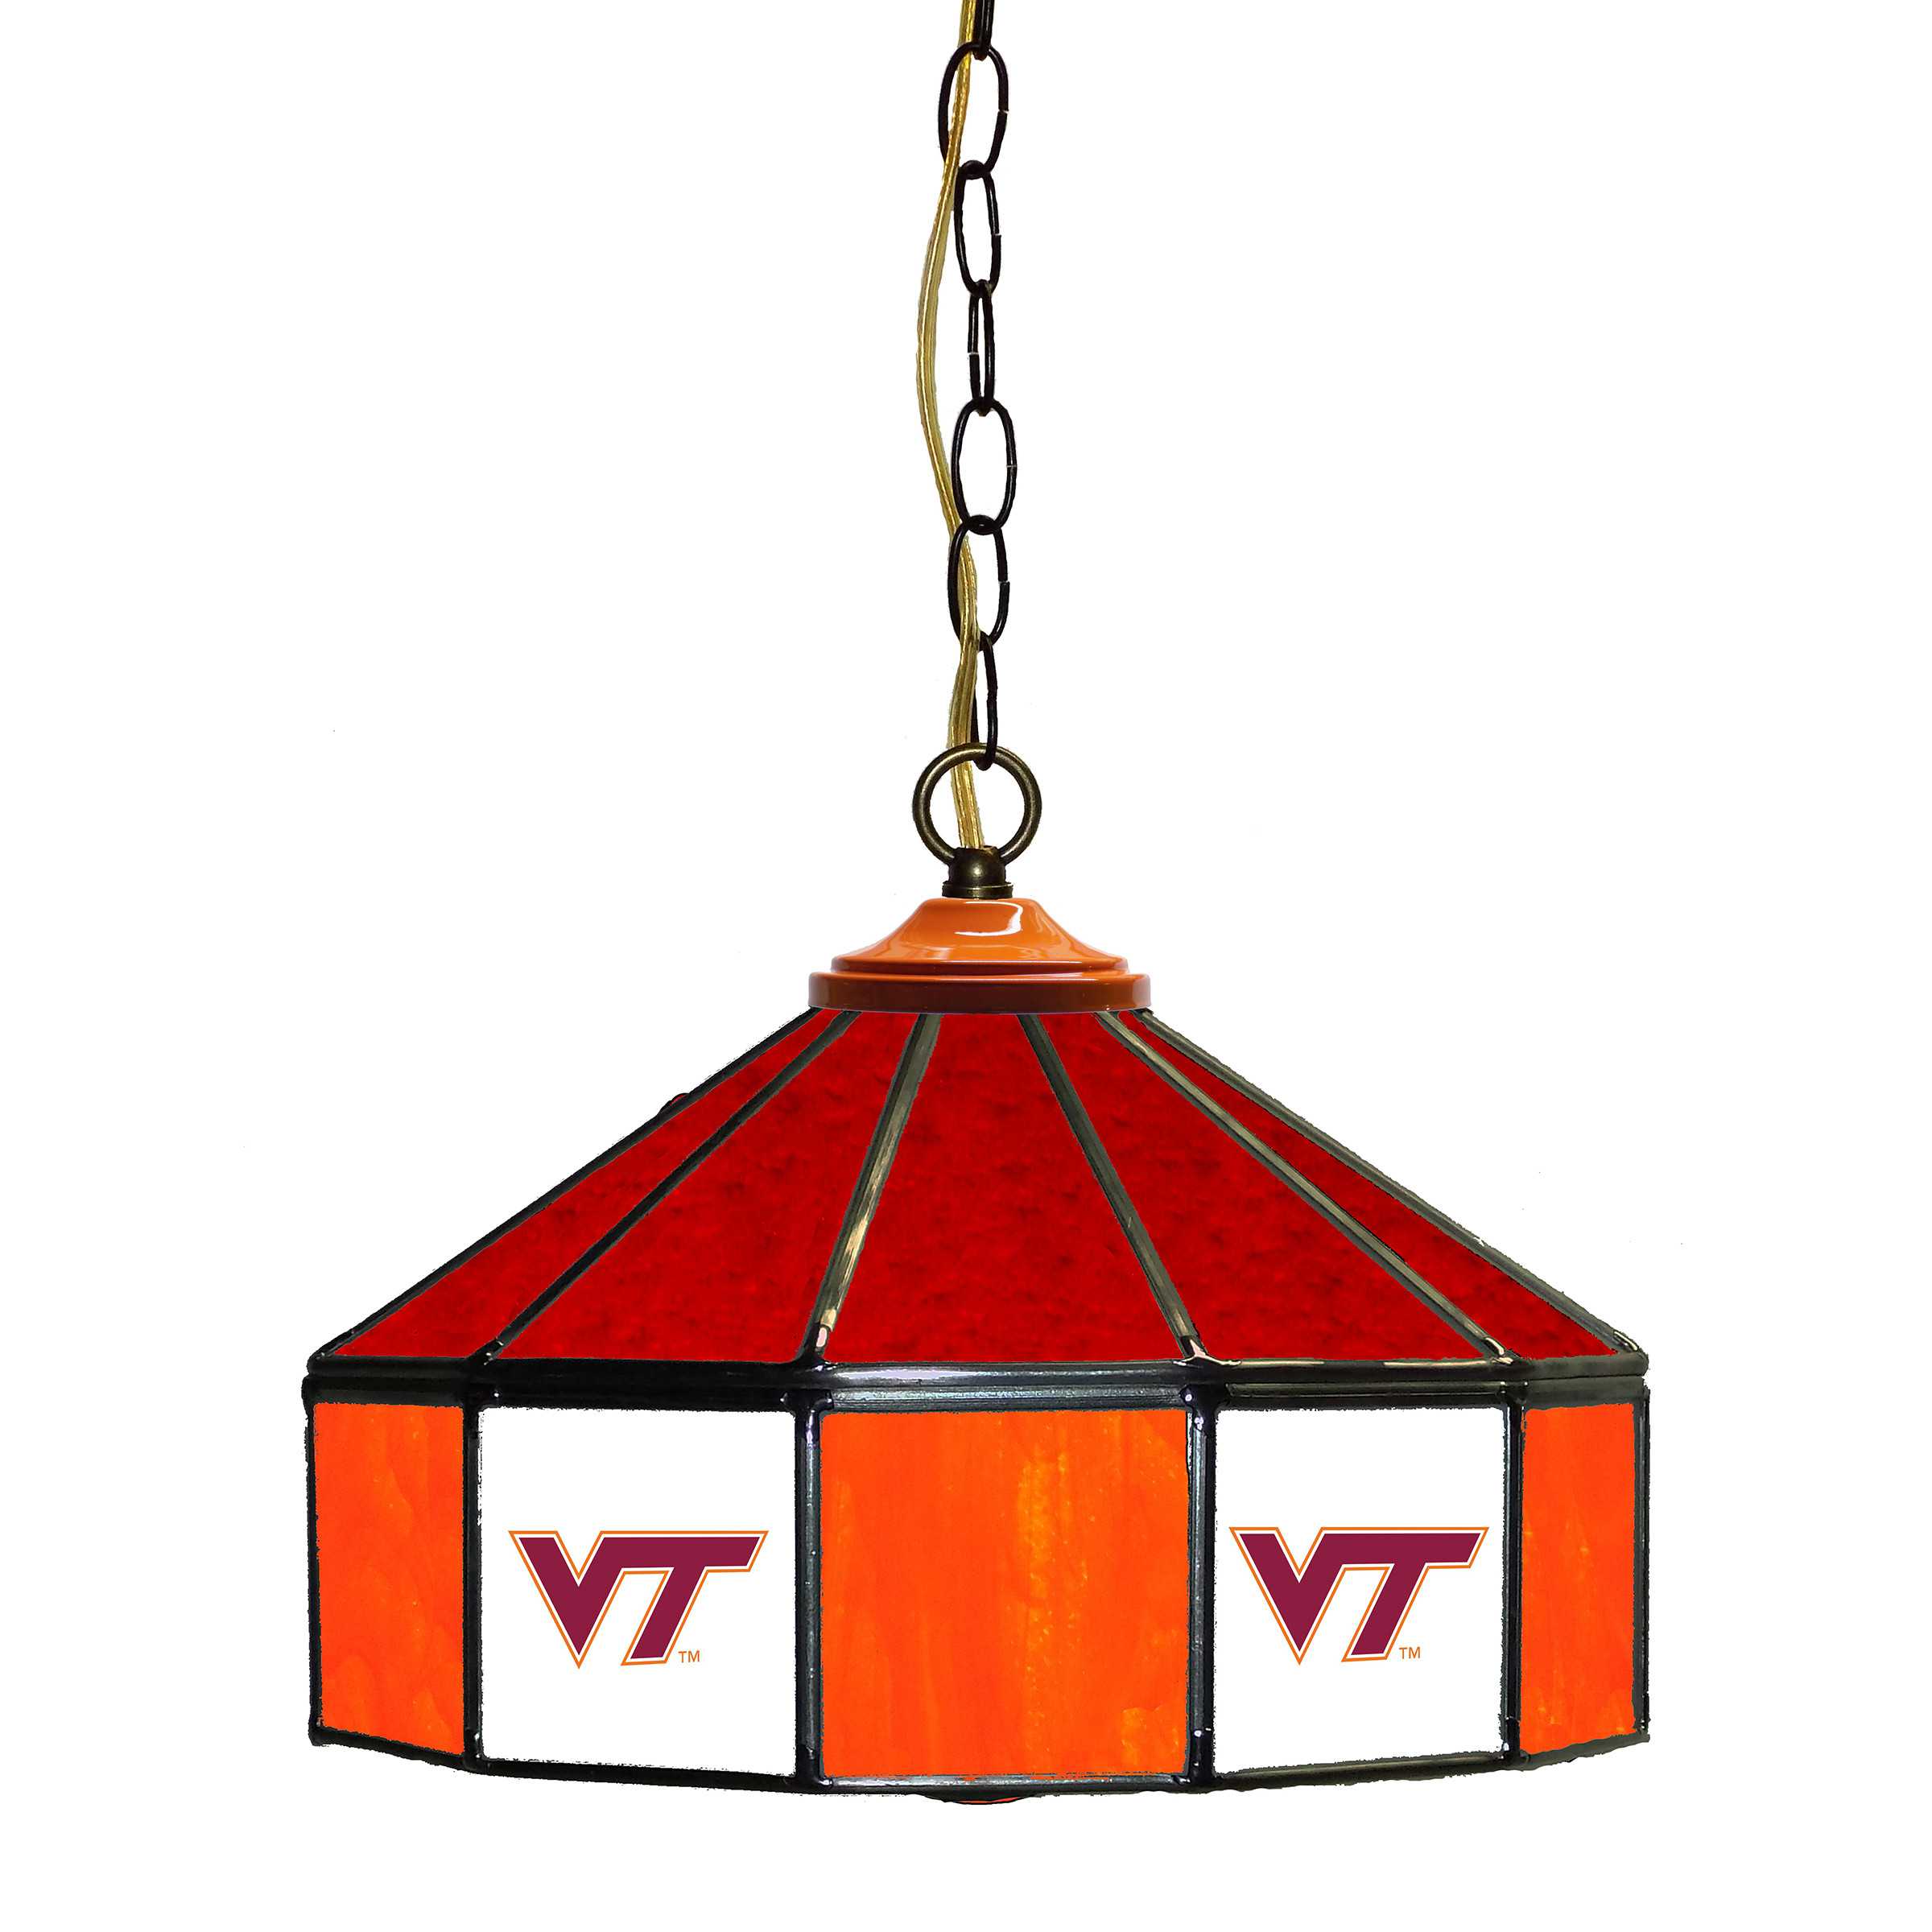 VIRGINIA TECH 14" GLASS PUB LAMP